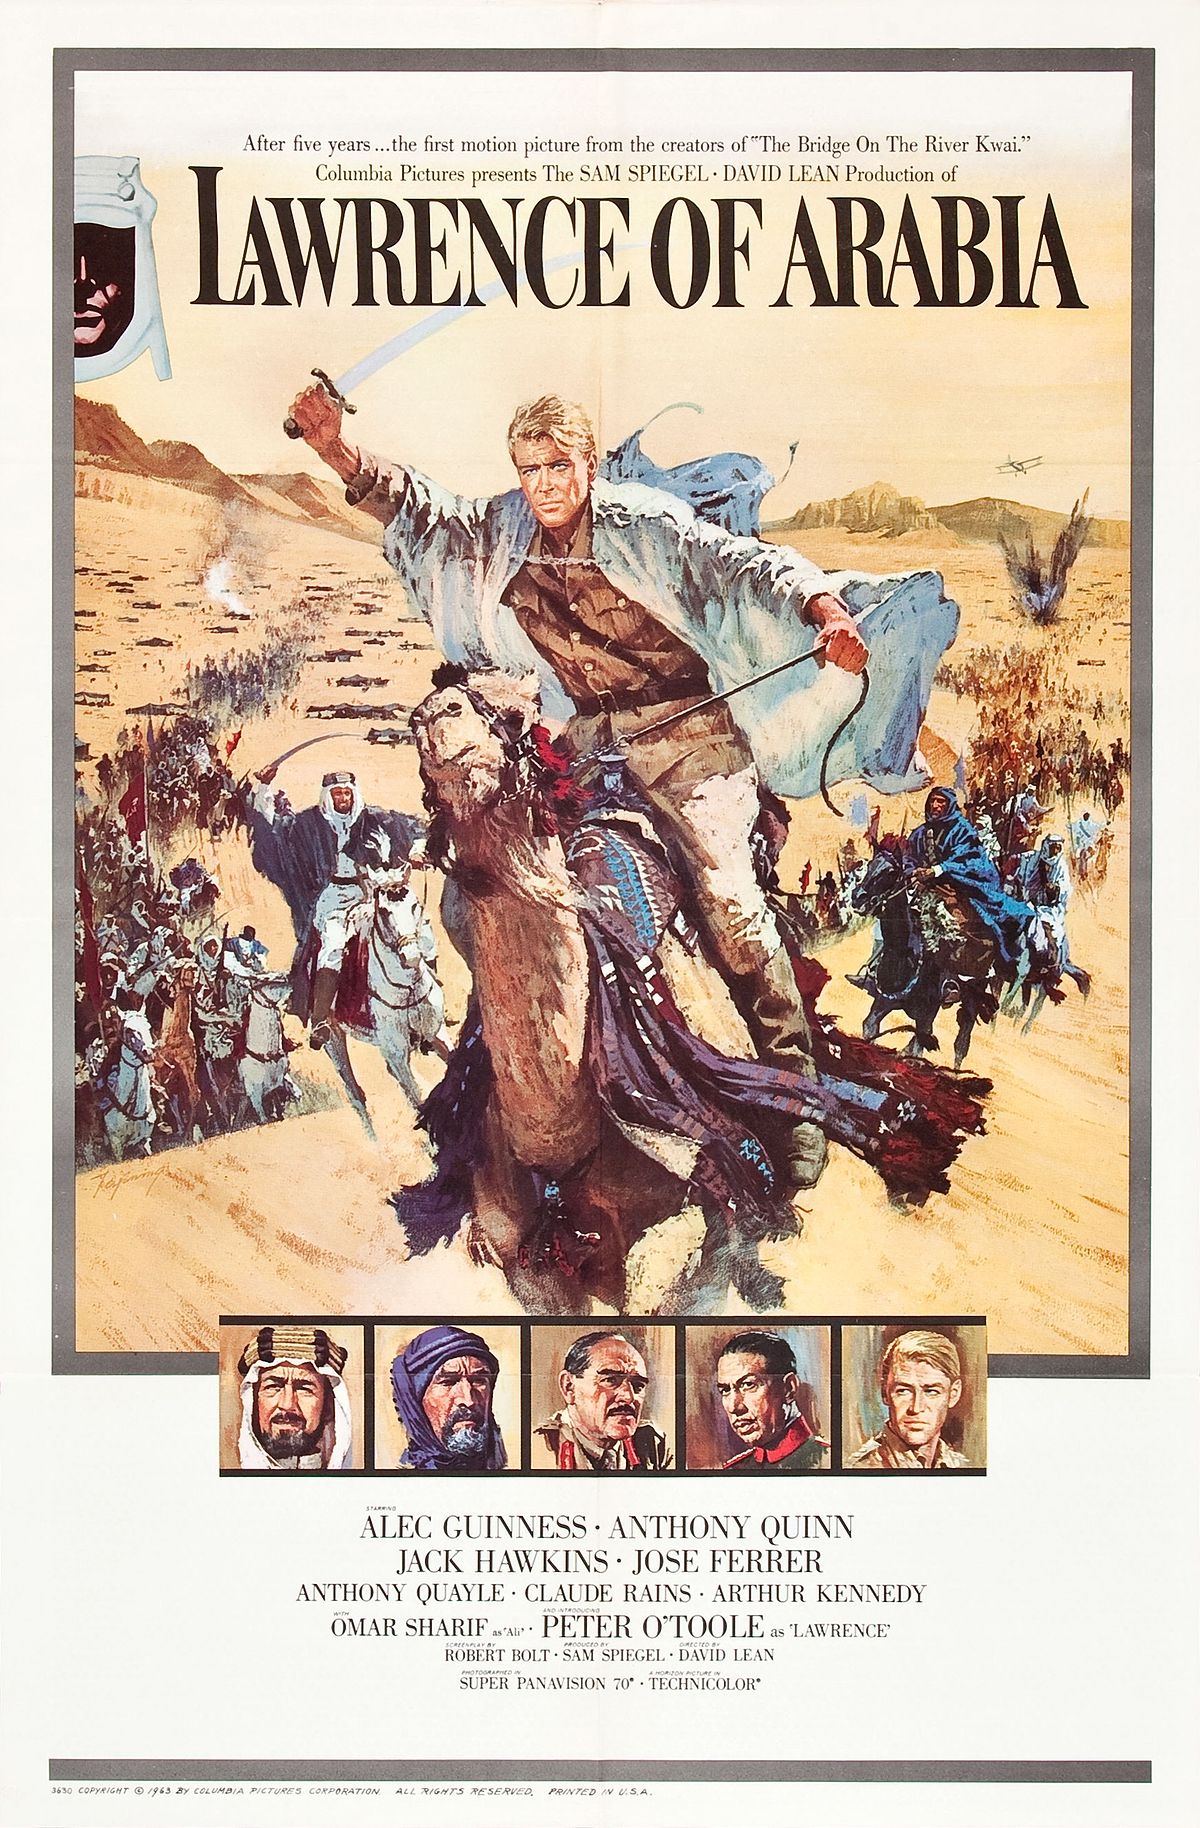 KING GEORGE VI OF THE UNITED KINGDOM Glossy 8x10 Photo Print Military Poster 